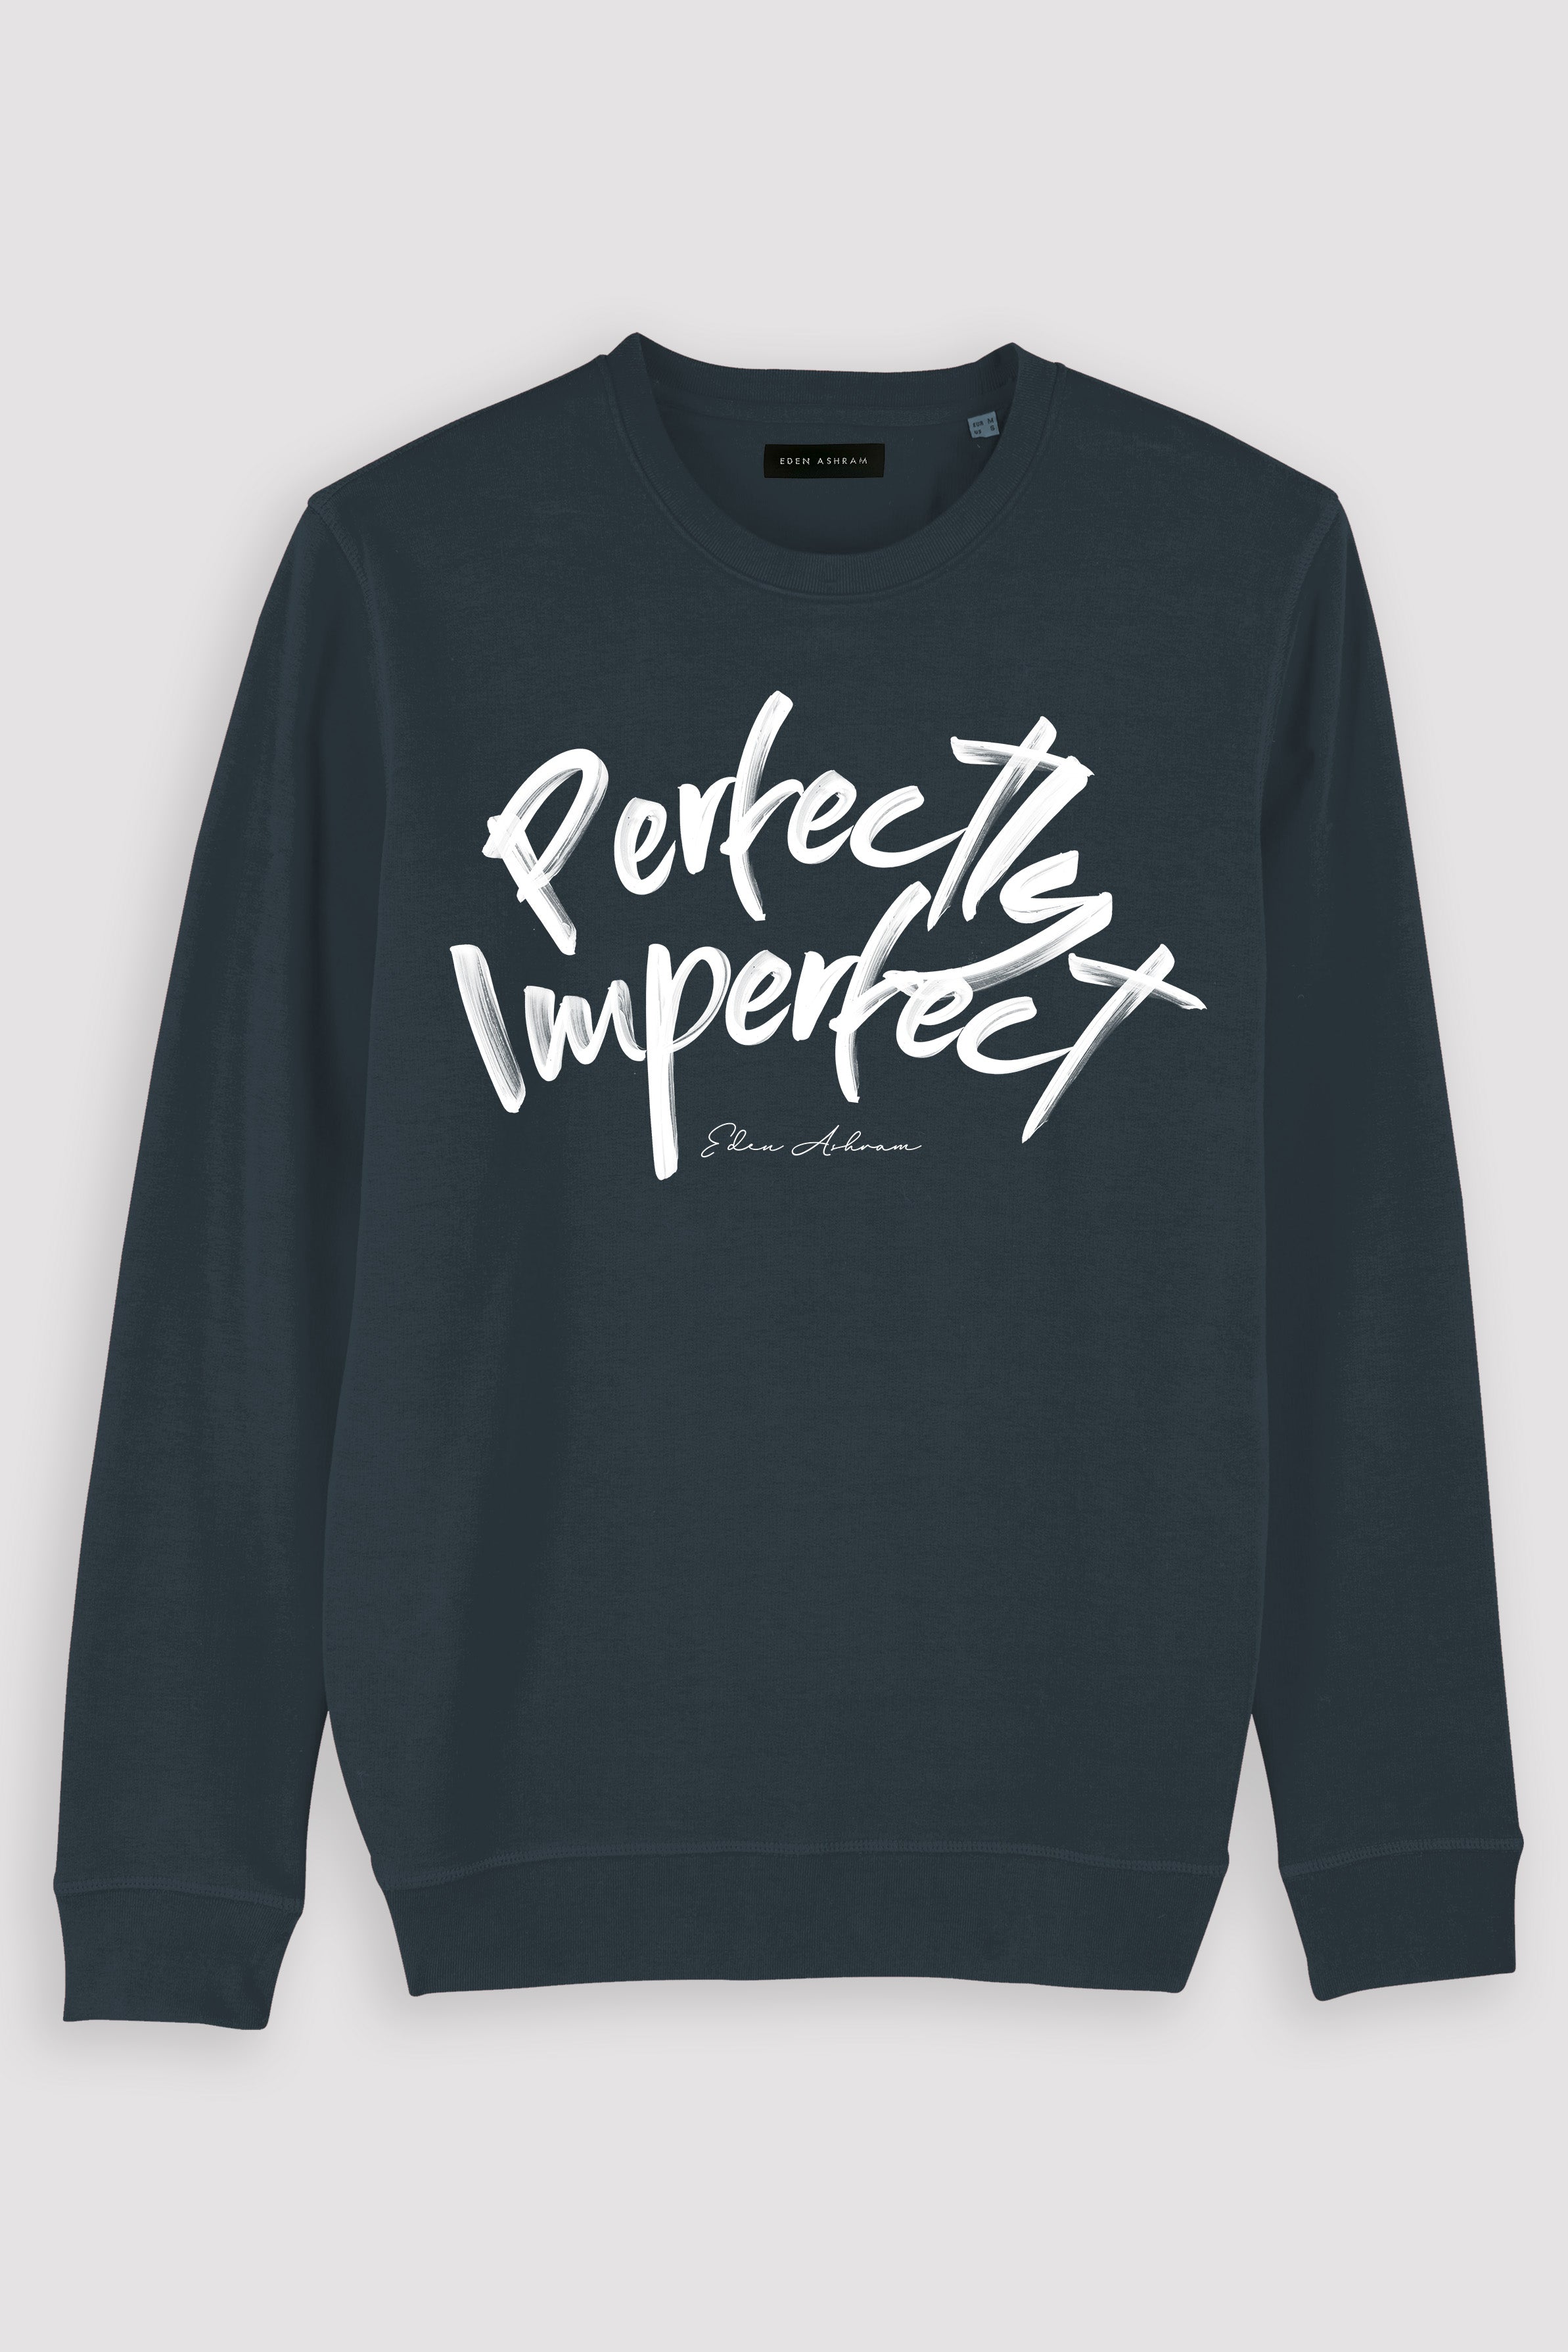 Eden Ashram Perfectly Imperfect Premium Crew Neck Sweatshirt India Ink Grey